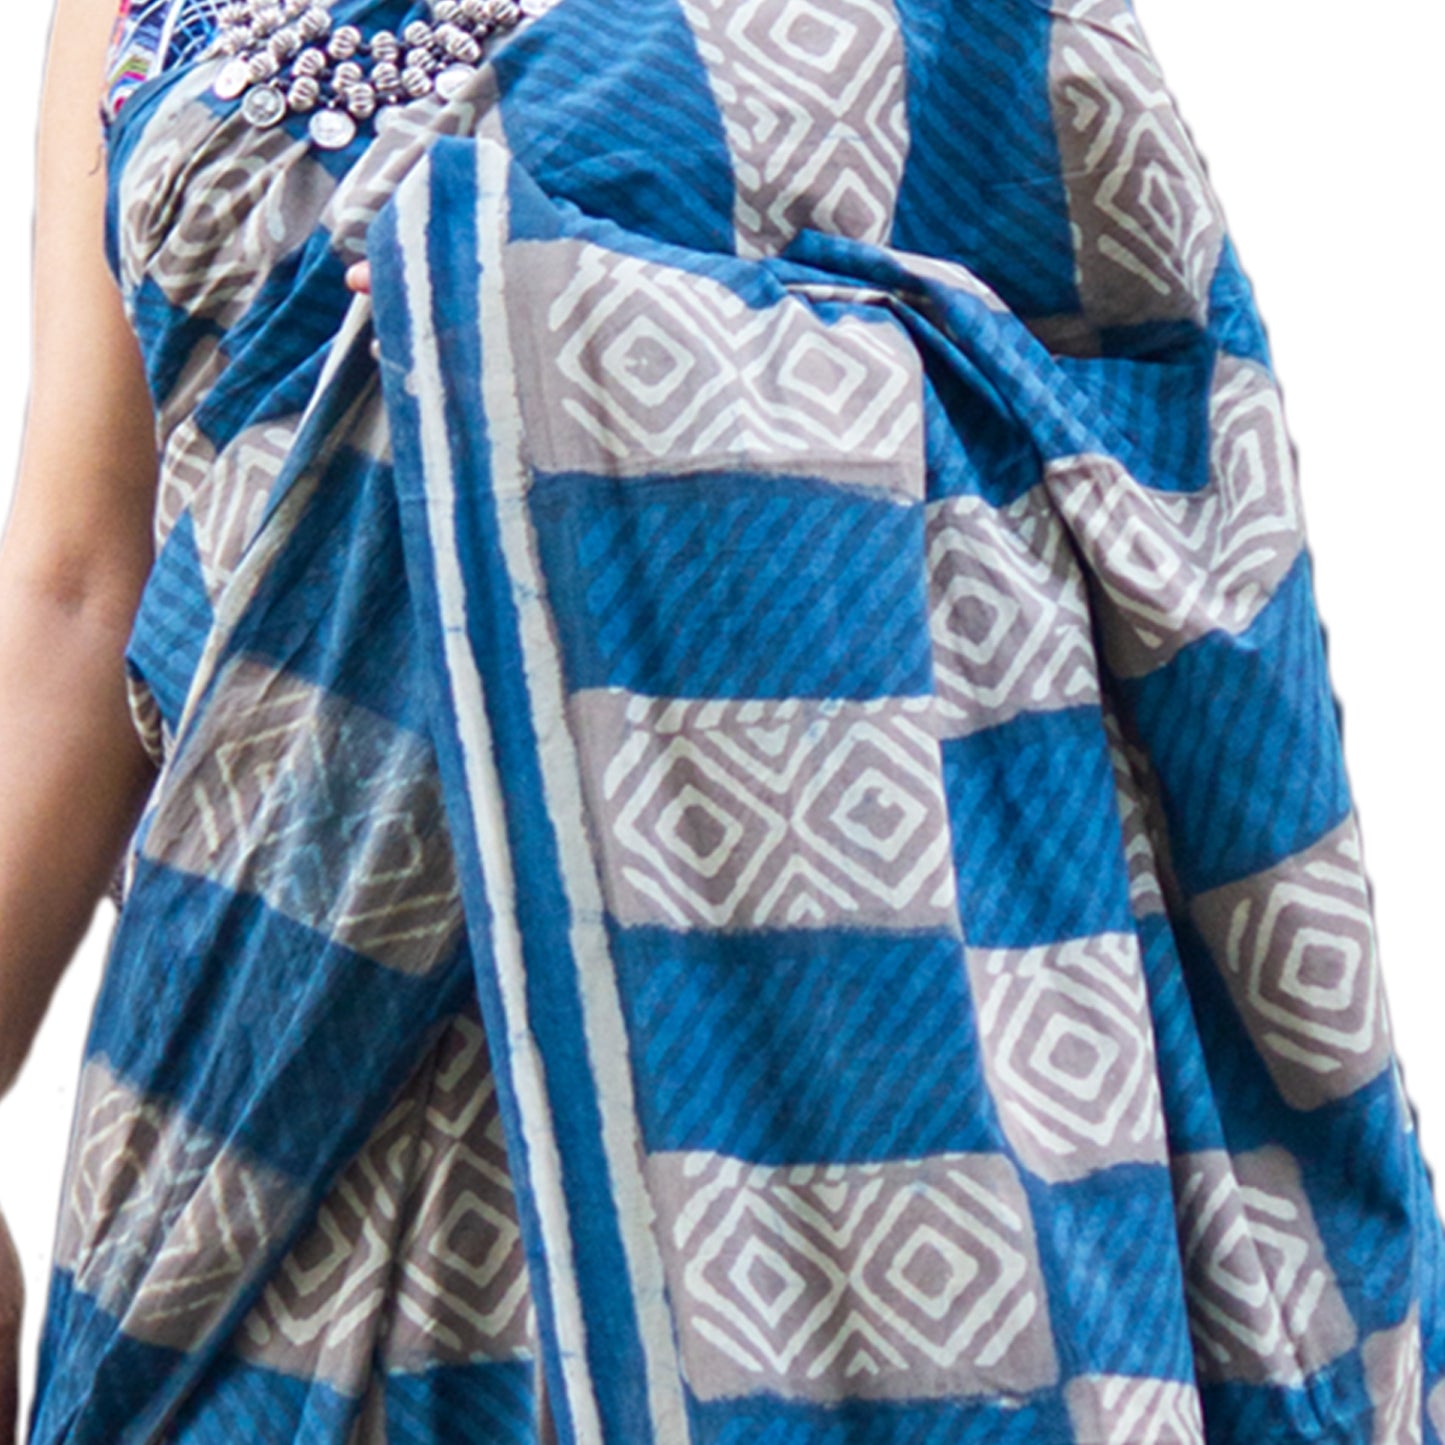 Organic Vibes Blue Grey Indigo Handblock Printed Mulmul Cotton Saree with Grey Checks